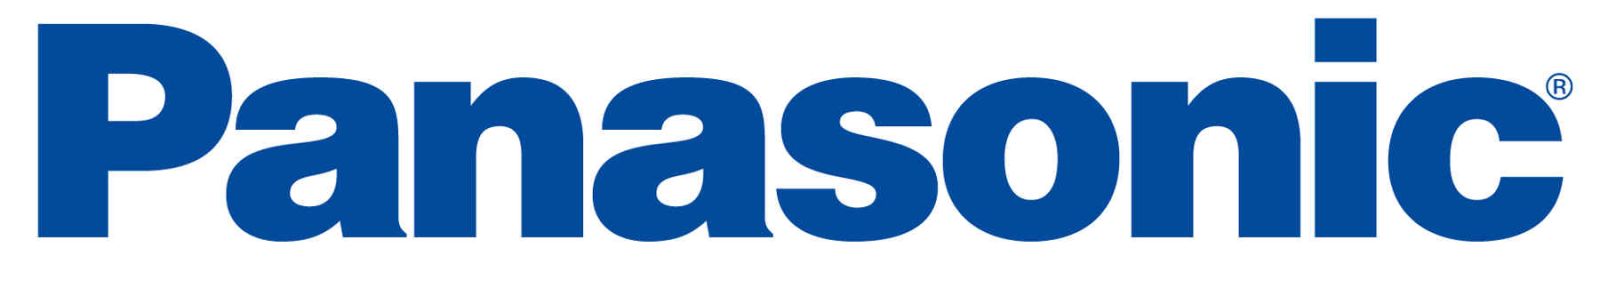 Fikirtepe  Panasonic TV logo